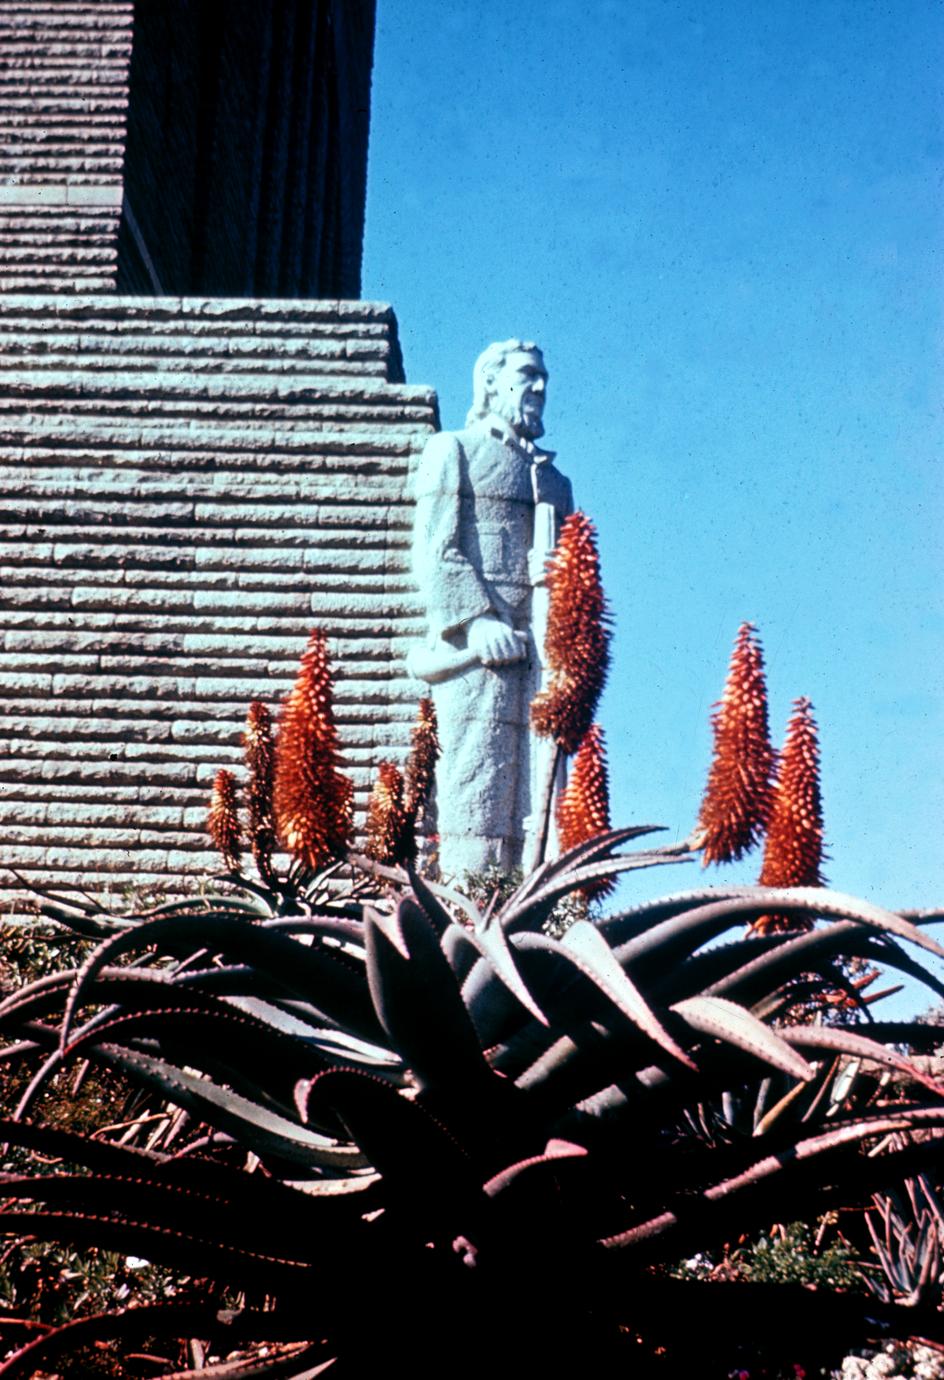 Statue in Voortrekker Monument to Honor the Boers Trek across South Africa